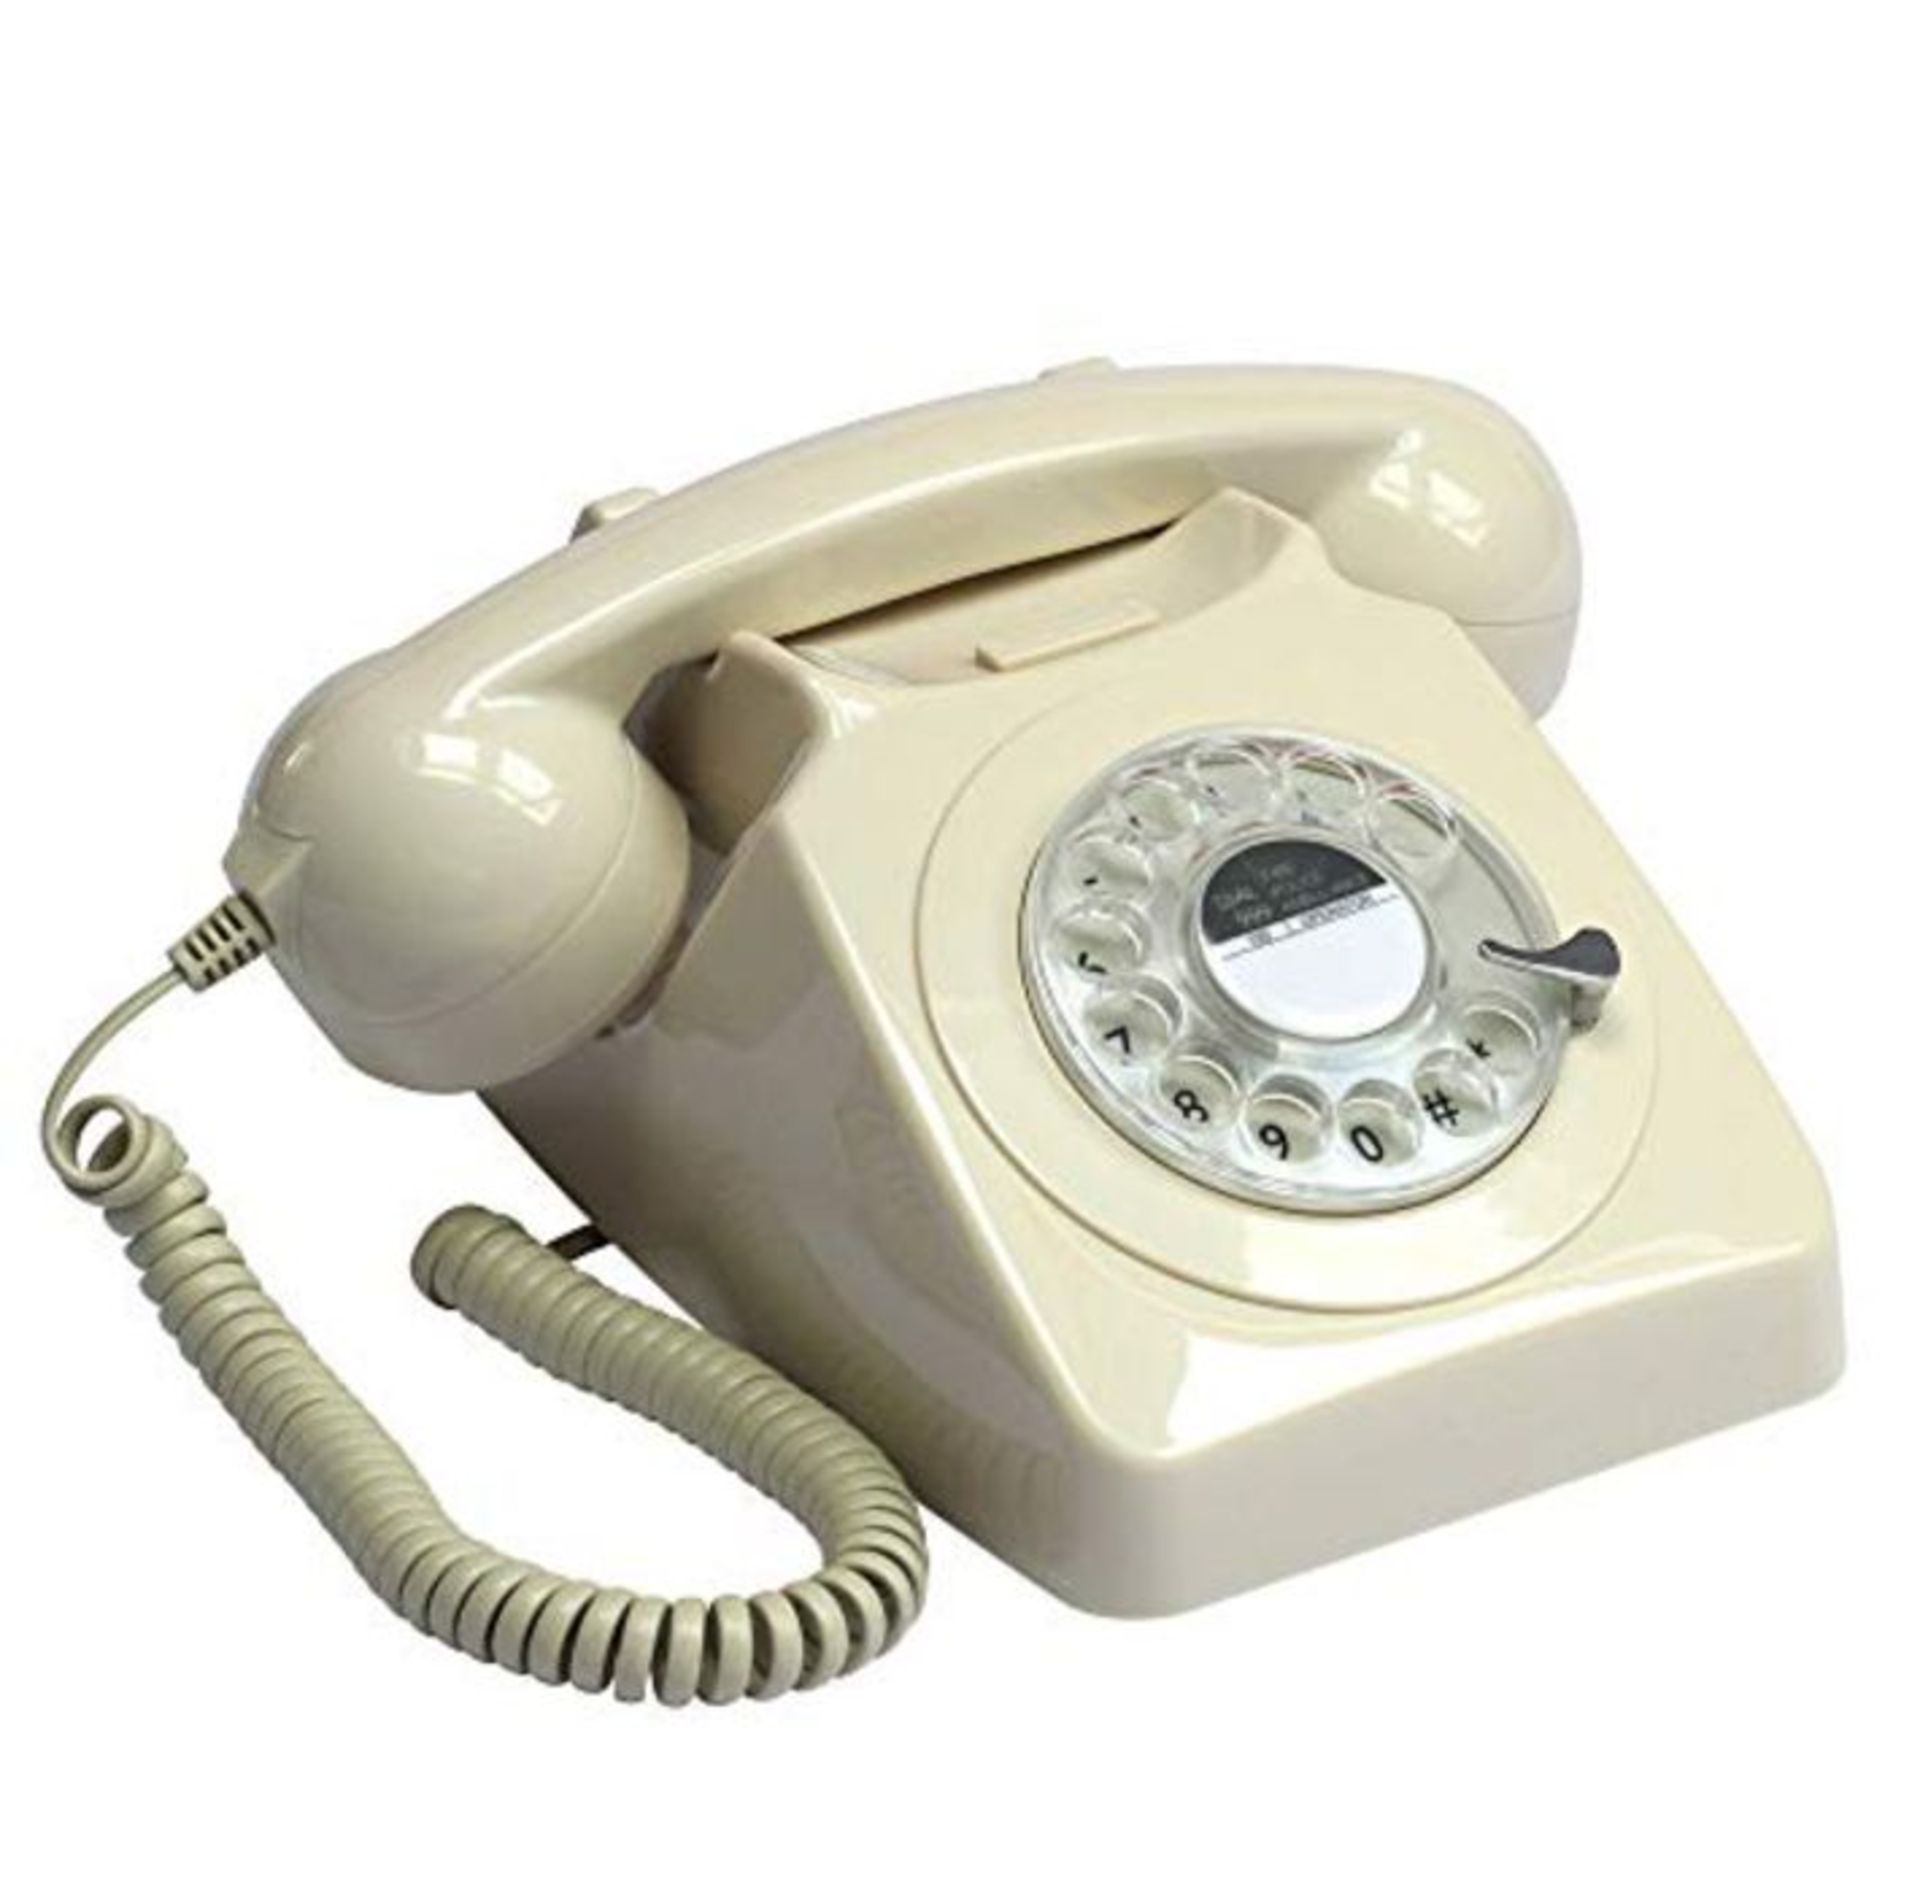 GPO 746 Rotary 1970s-Style Retro Landline Telephone, Classic Telephone with Ringer On/